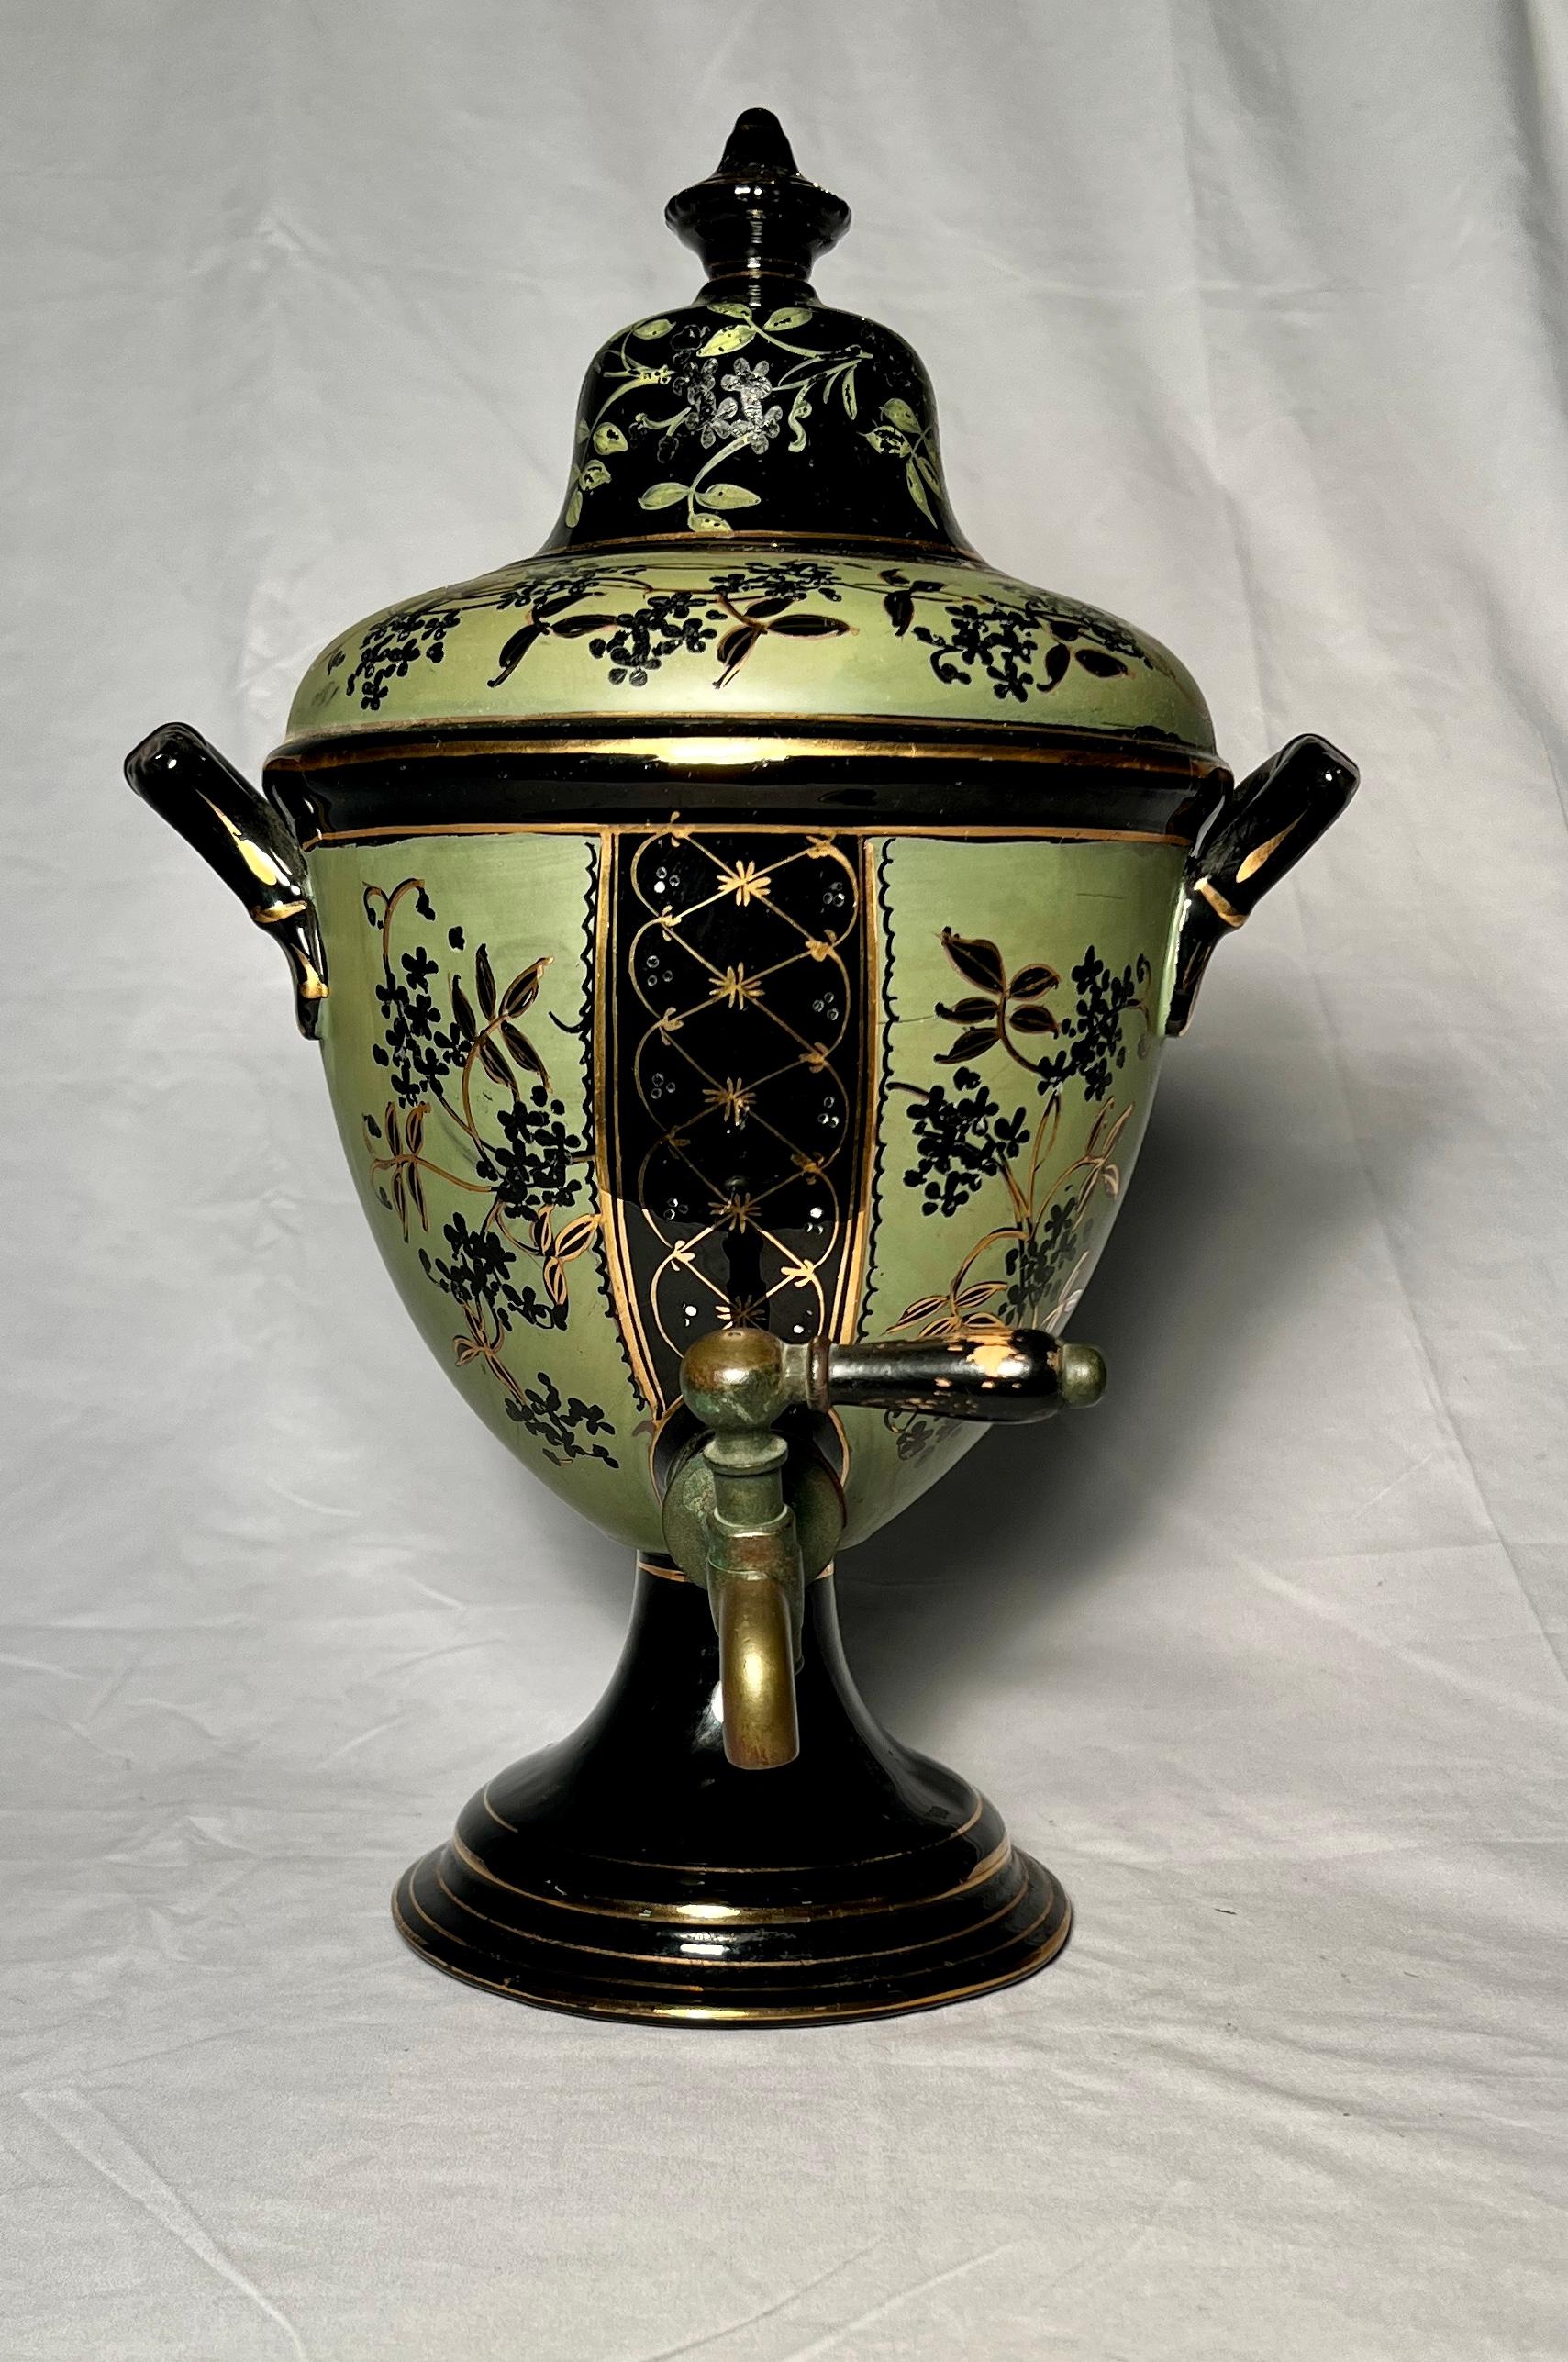 Antique English Porcelain Hot Water Kettle circa 1880.